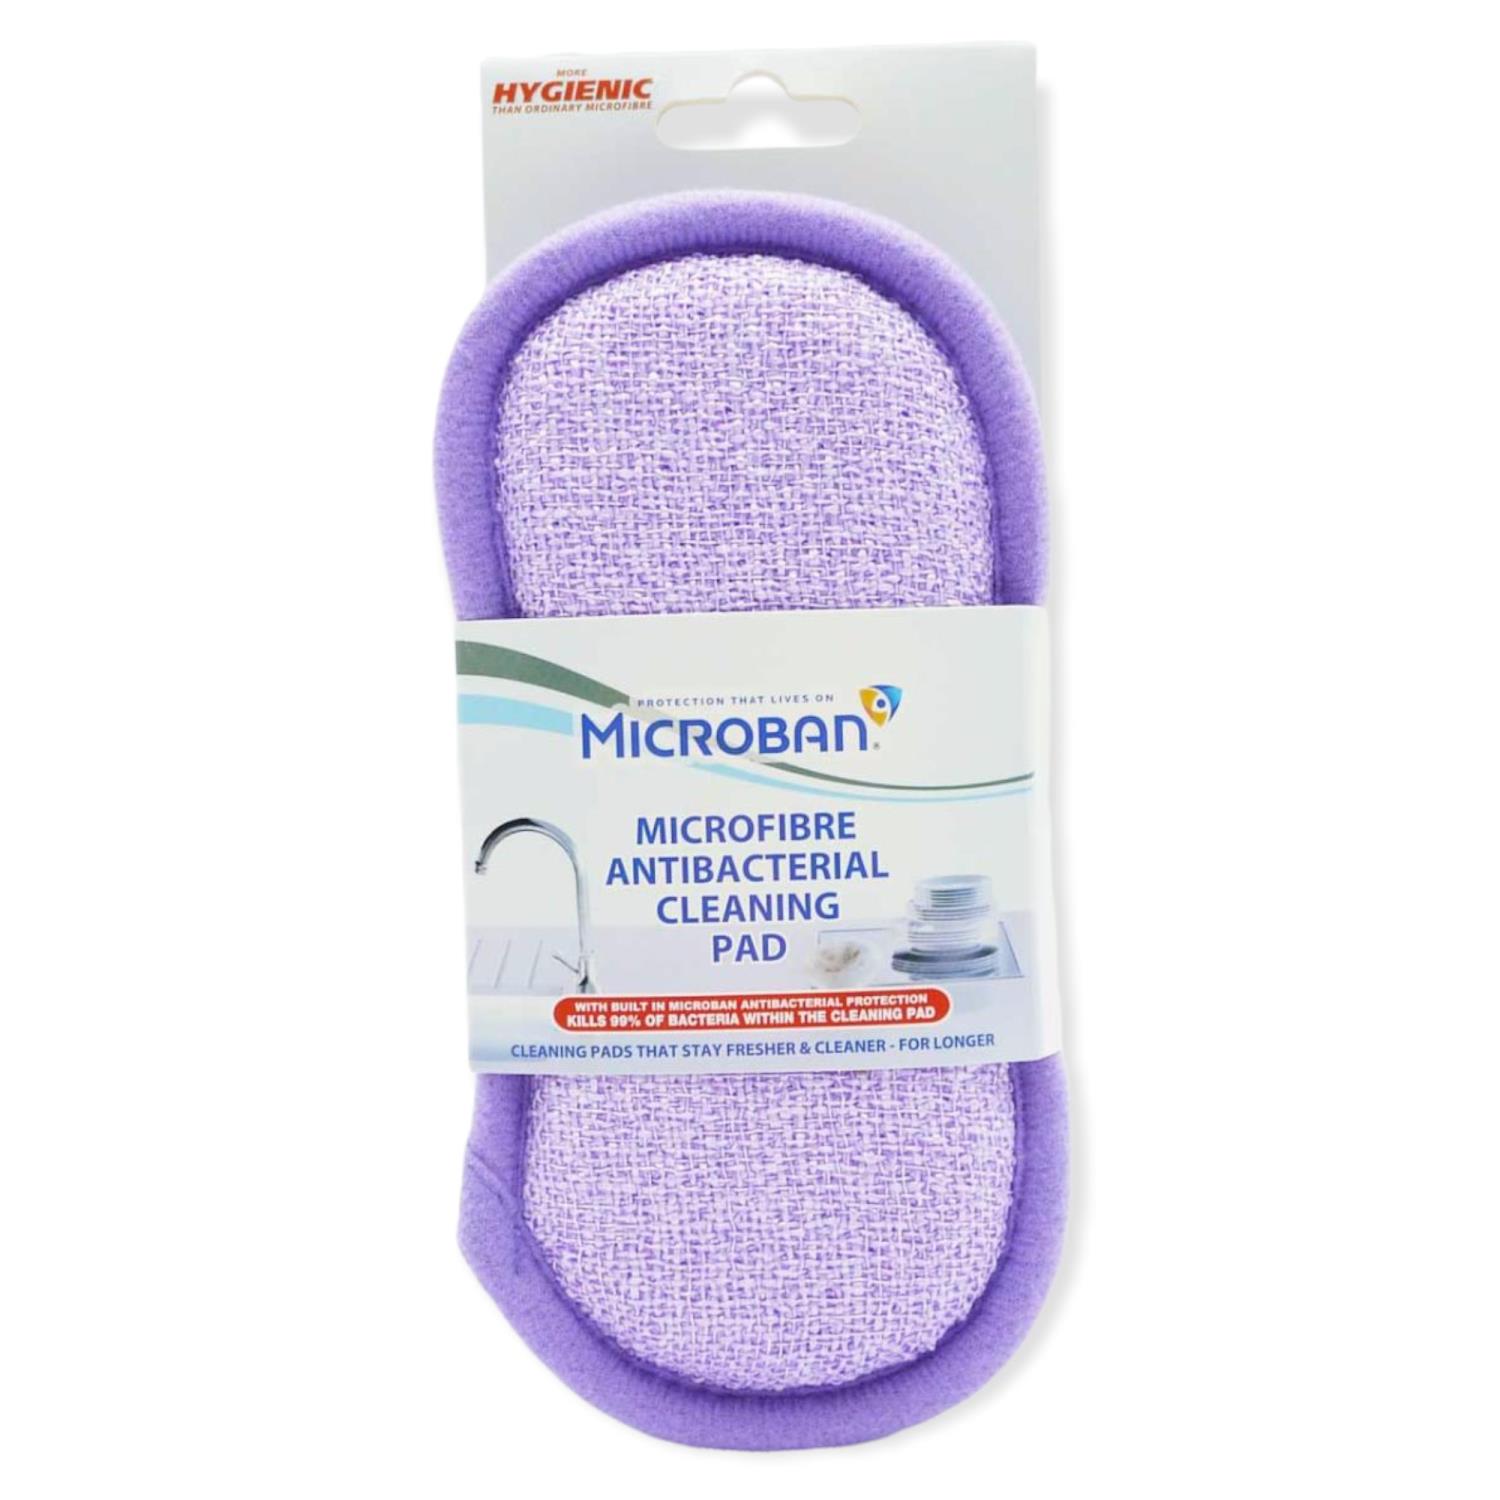 Microban Antibacterial Cleaning Pad